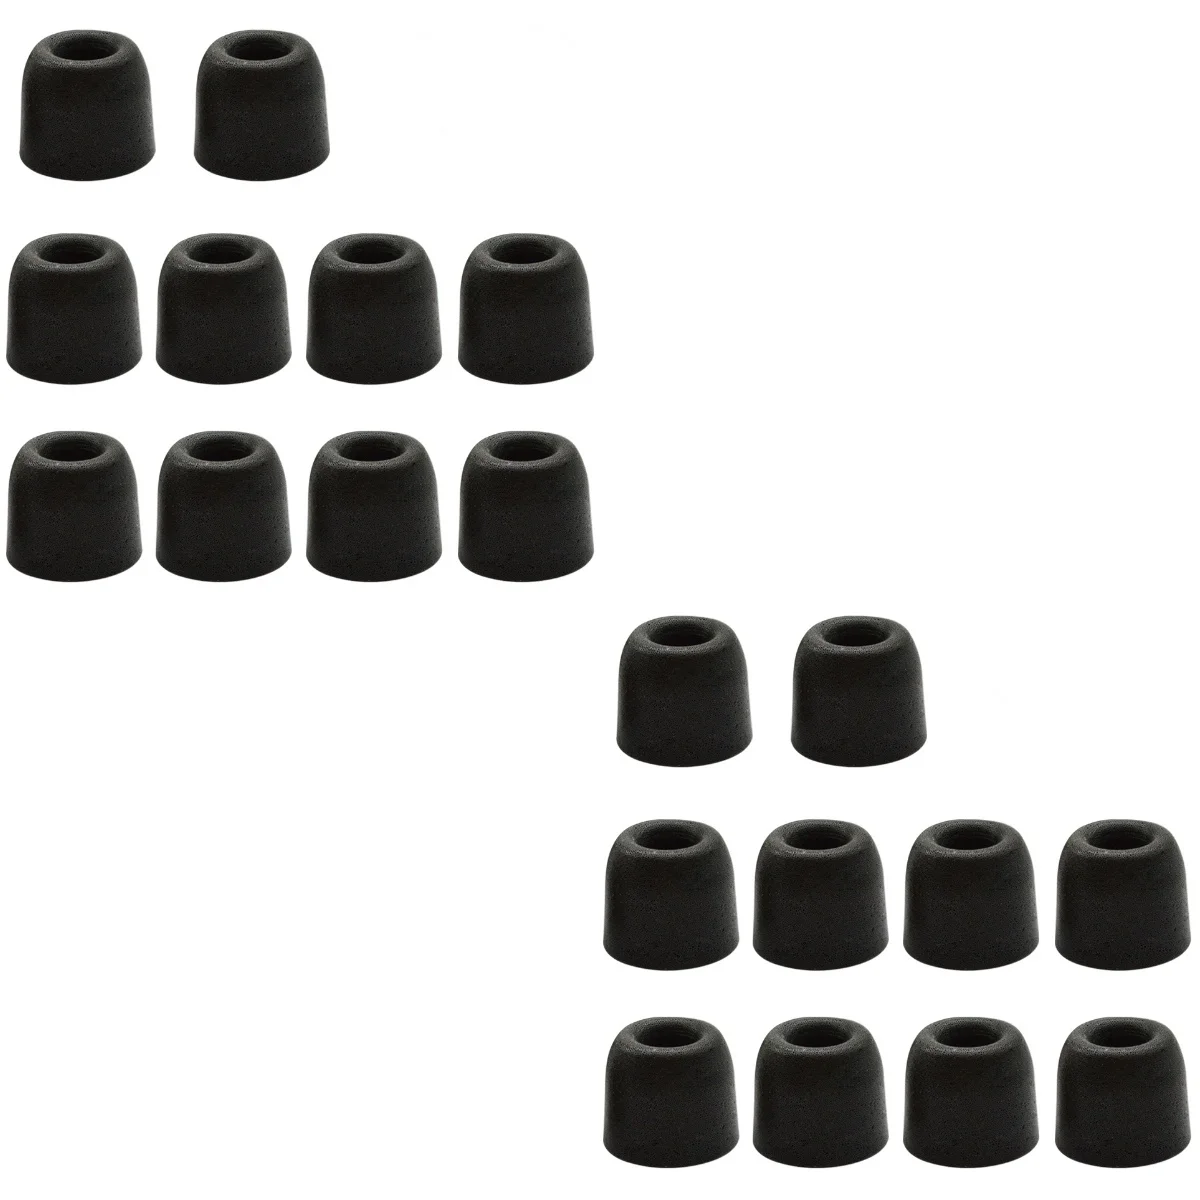 

20 pcs Premium Earphone Tips Noise Isolation T-200 Earbud Replacement (Black)